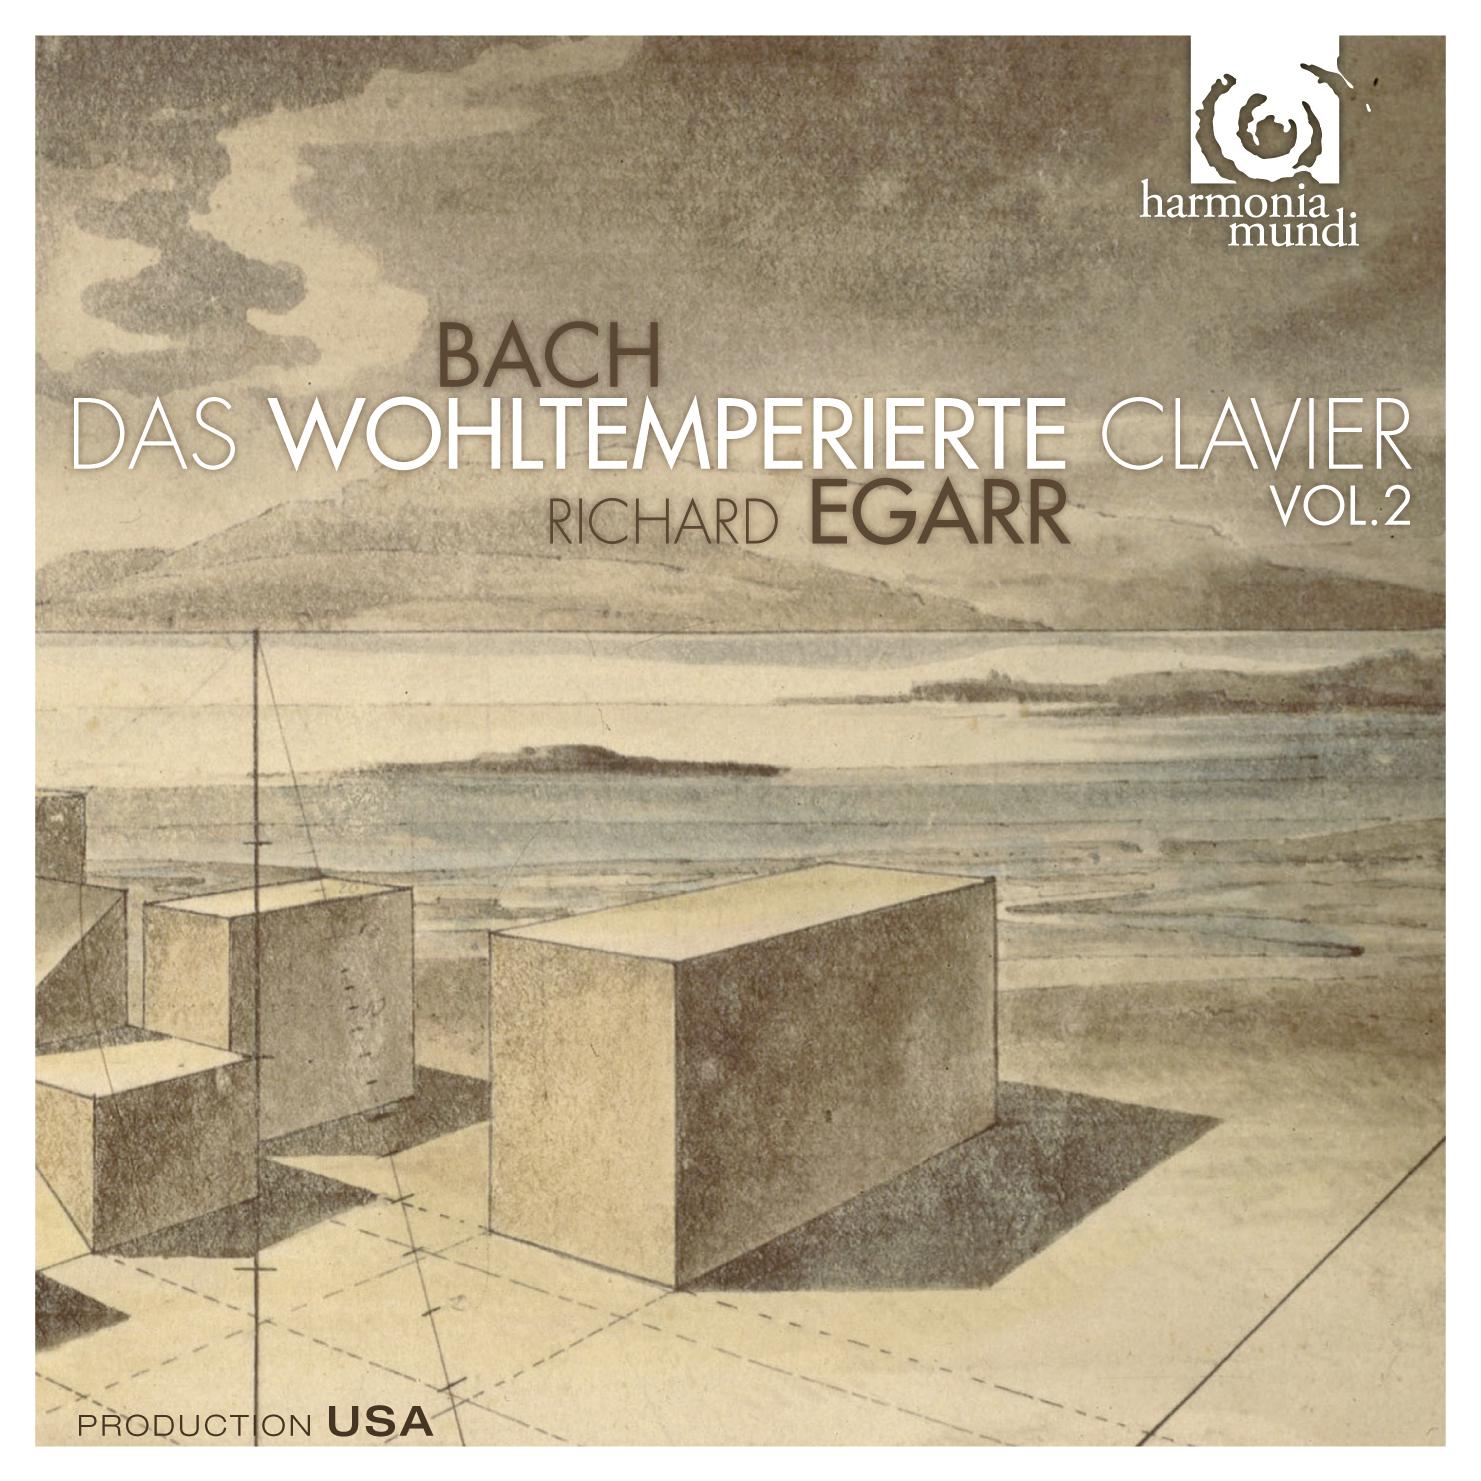 Well-Tempered Clavier, Book II, BWV 870-893: Prelude VI in D Minor, BWV 875